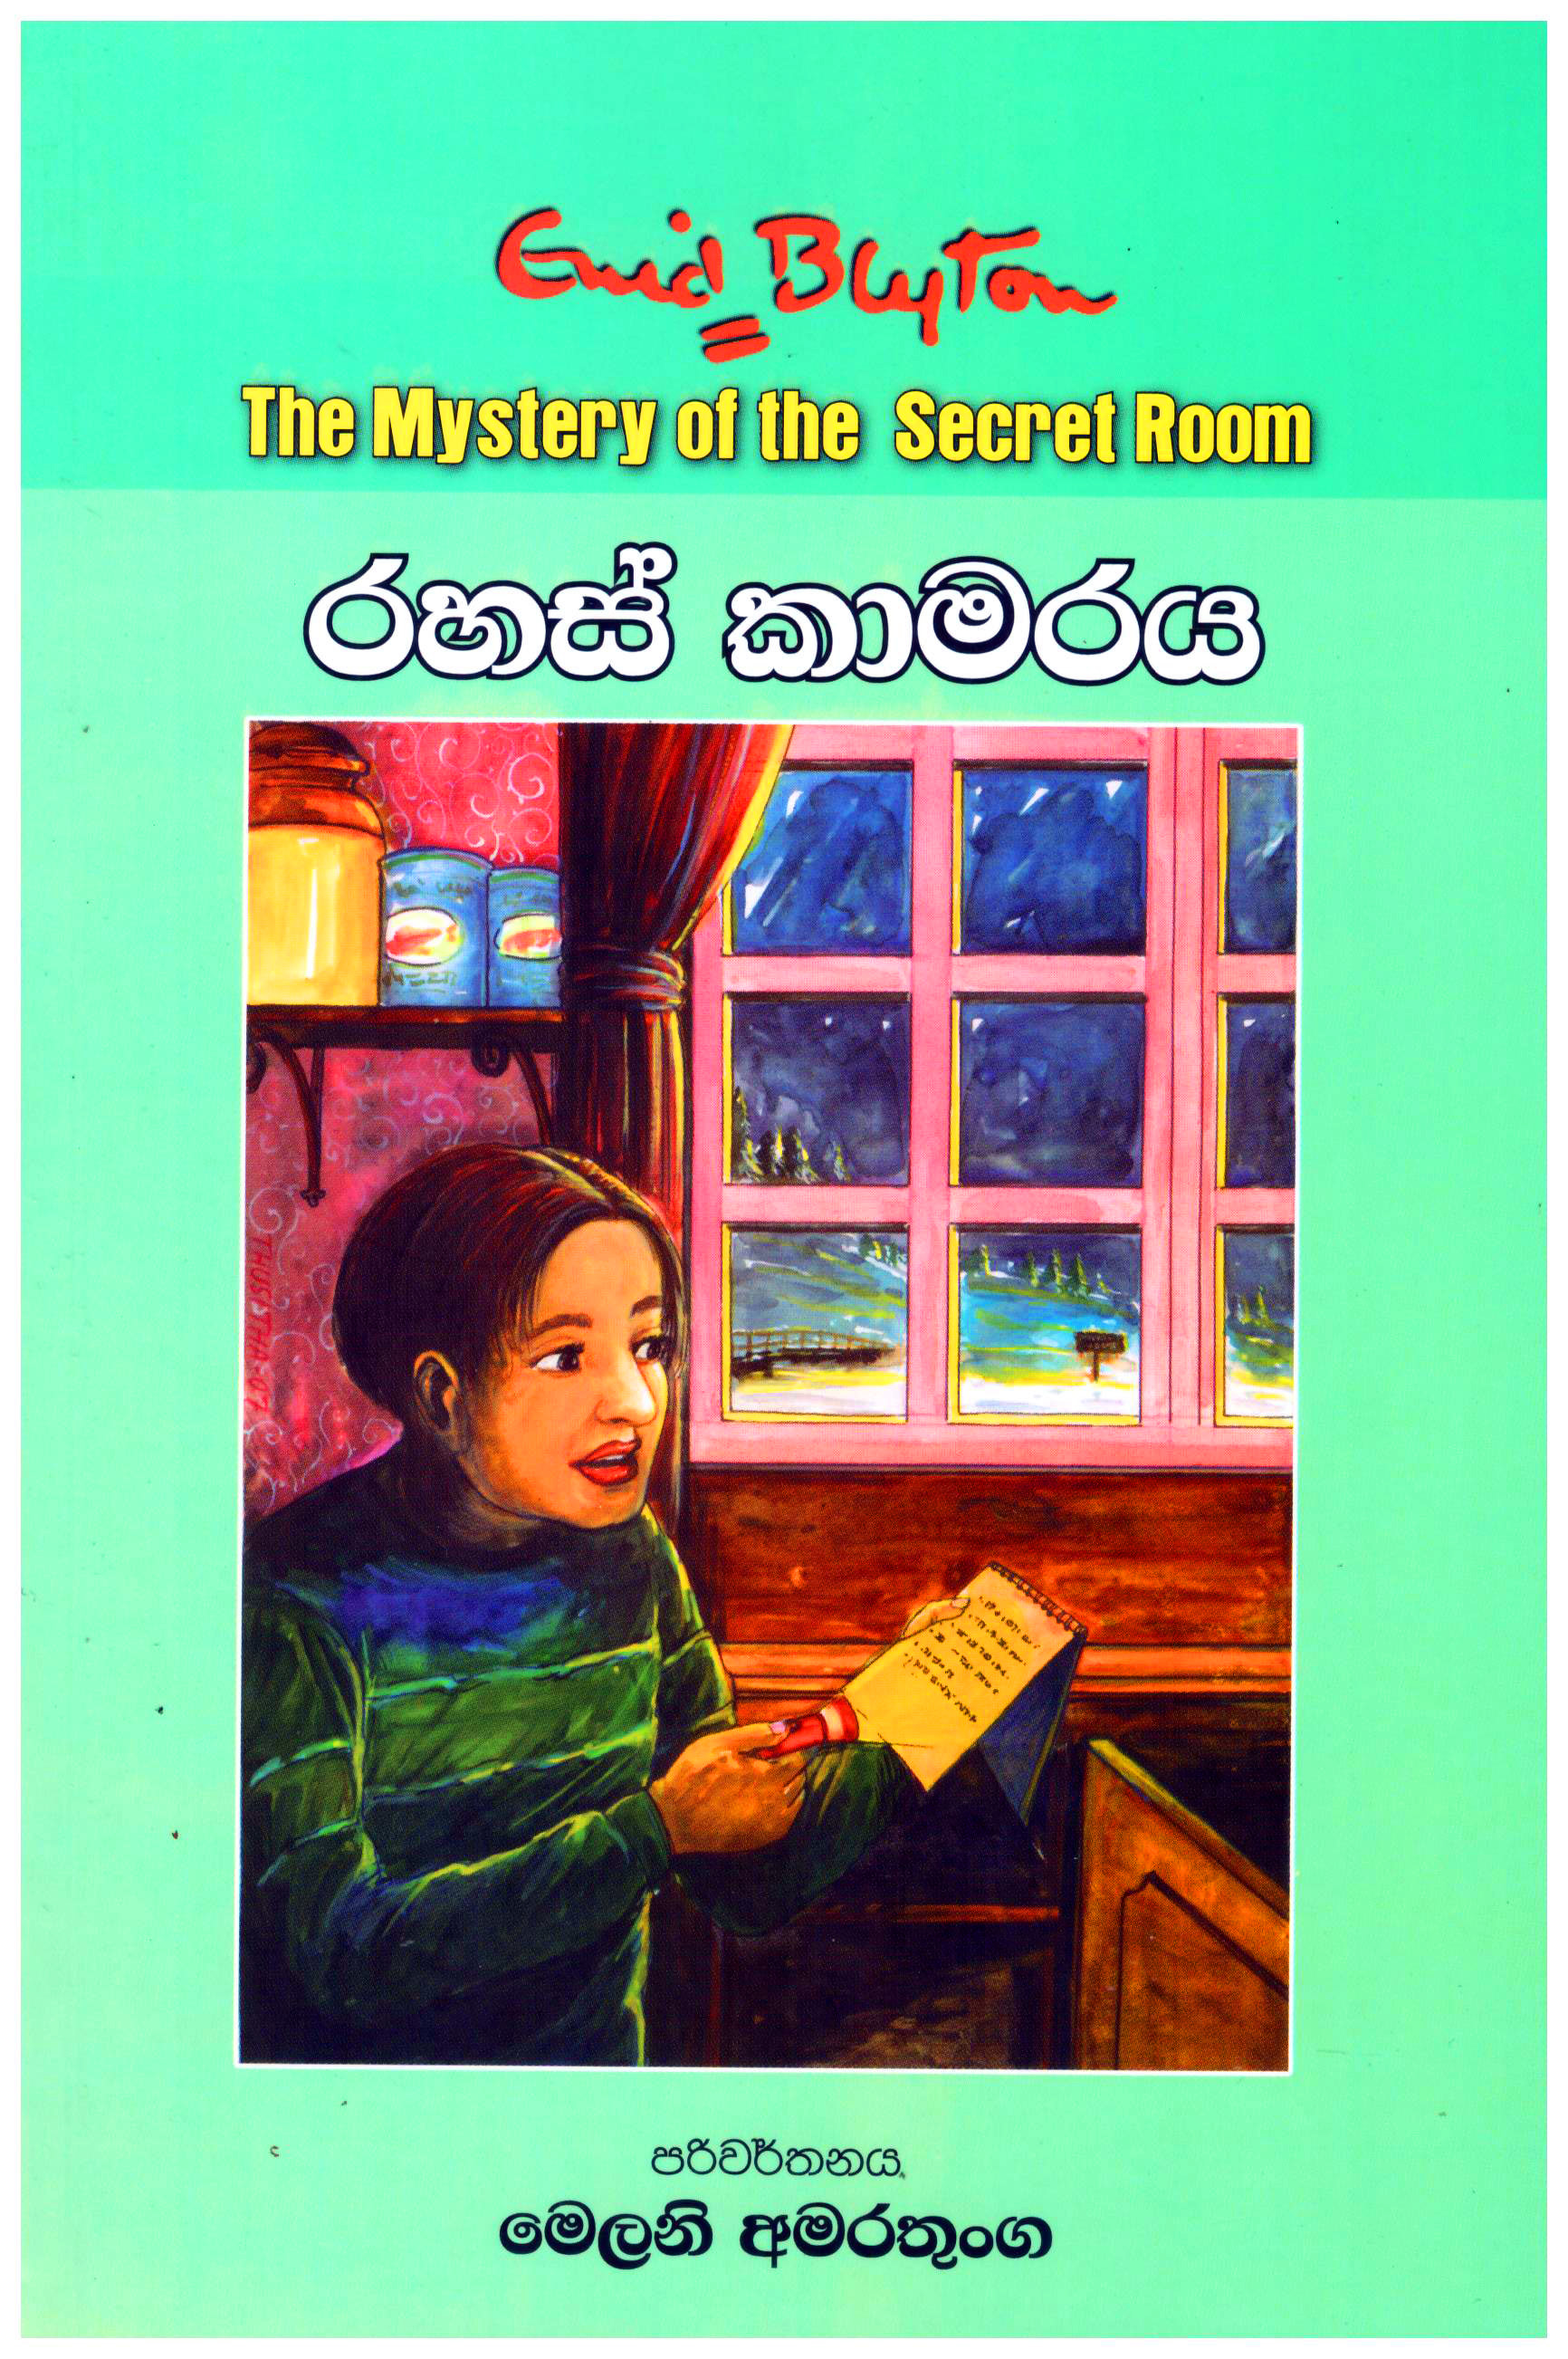 Rahas Kamaraya - Translations of The Mystery of The Secret Room by Enid Blyton